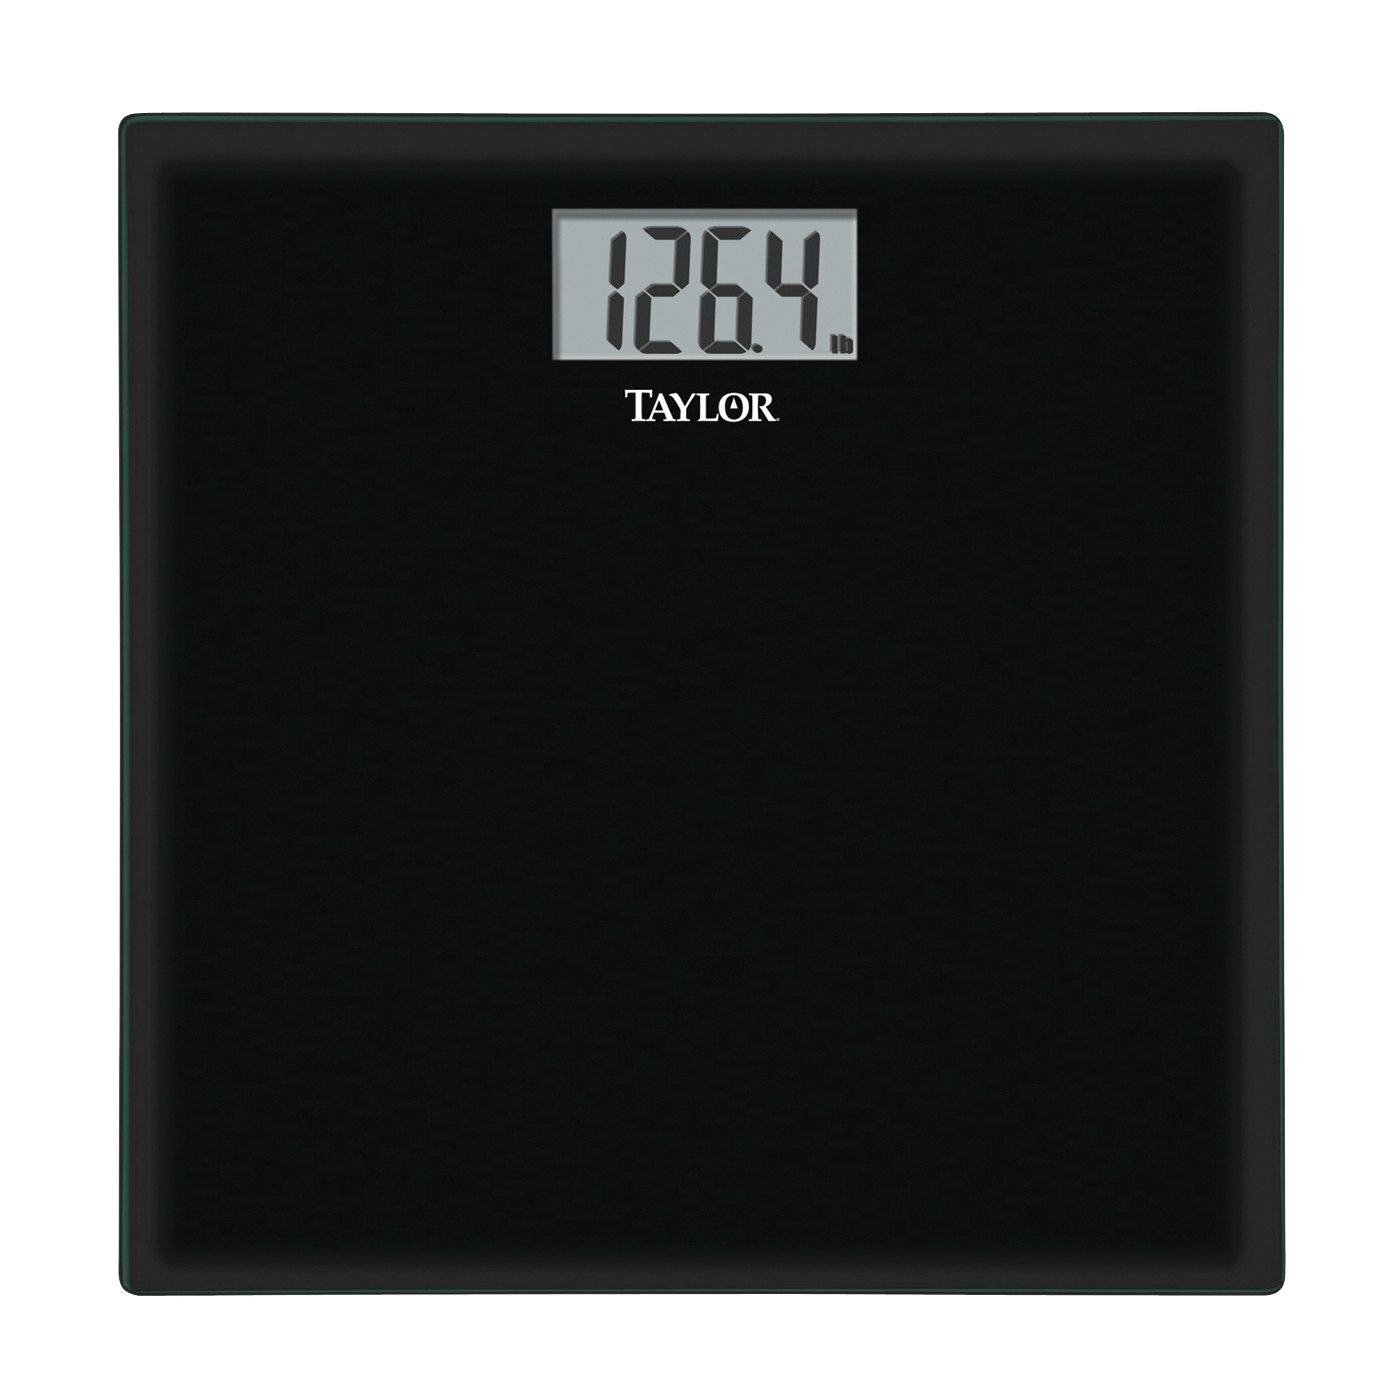 Taylor 20005014T Bathroom Scale, 300 Pound Capacity, Analog